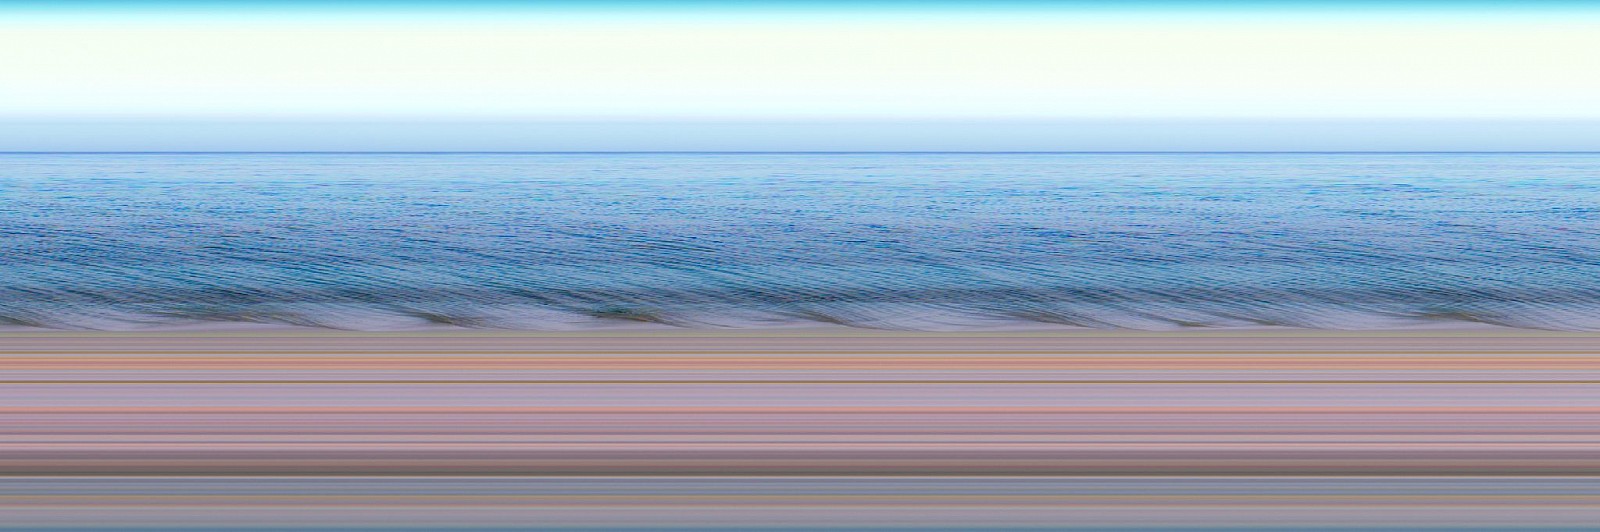 Jay Mark Johnson, COZUMEL WAVES #14, 2009 Cozumel MX
archival pigment on paper, mounted on aluminum, 40 x 120 in. (101.6 x 304.8 cm)